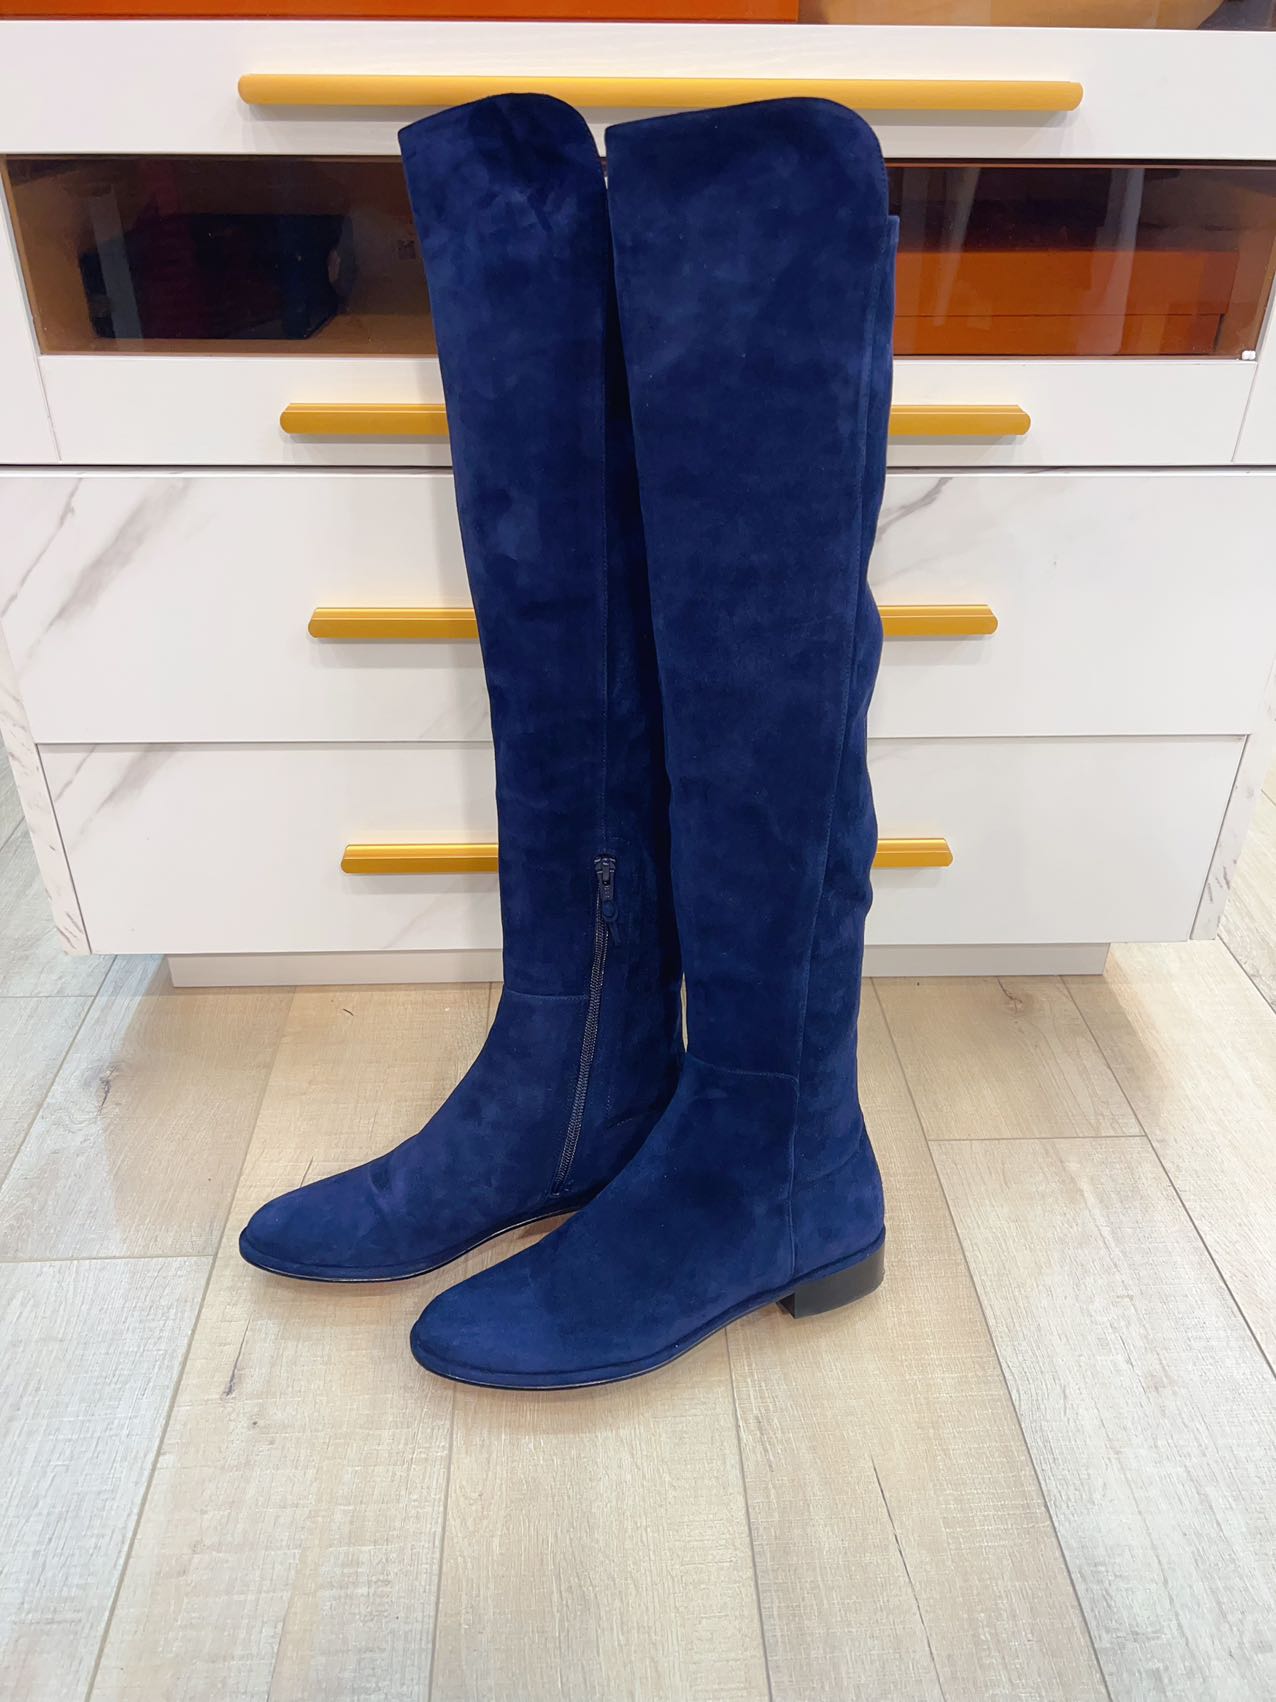 Stuart Weitzman Allserve nice Blue Suede Knee Boots Size7.5